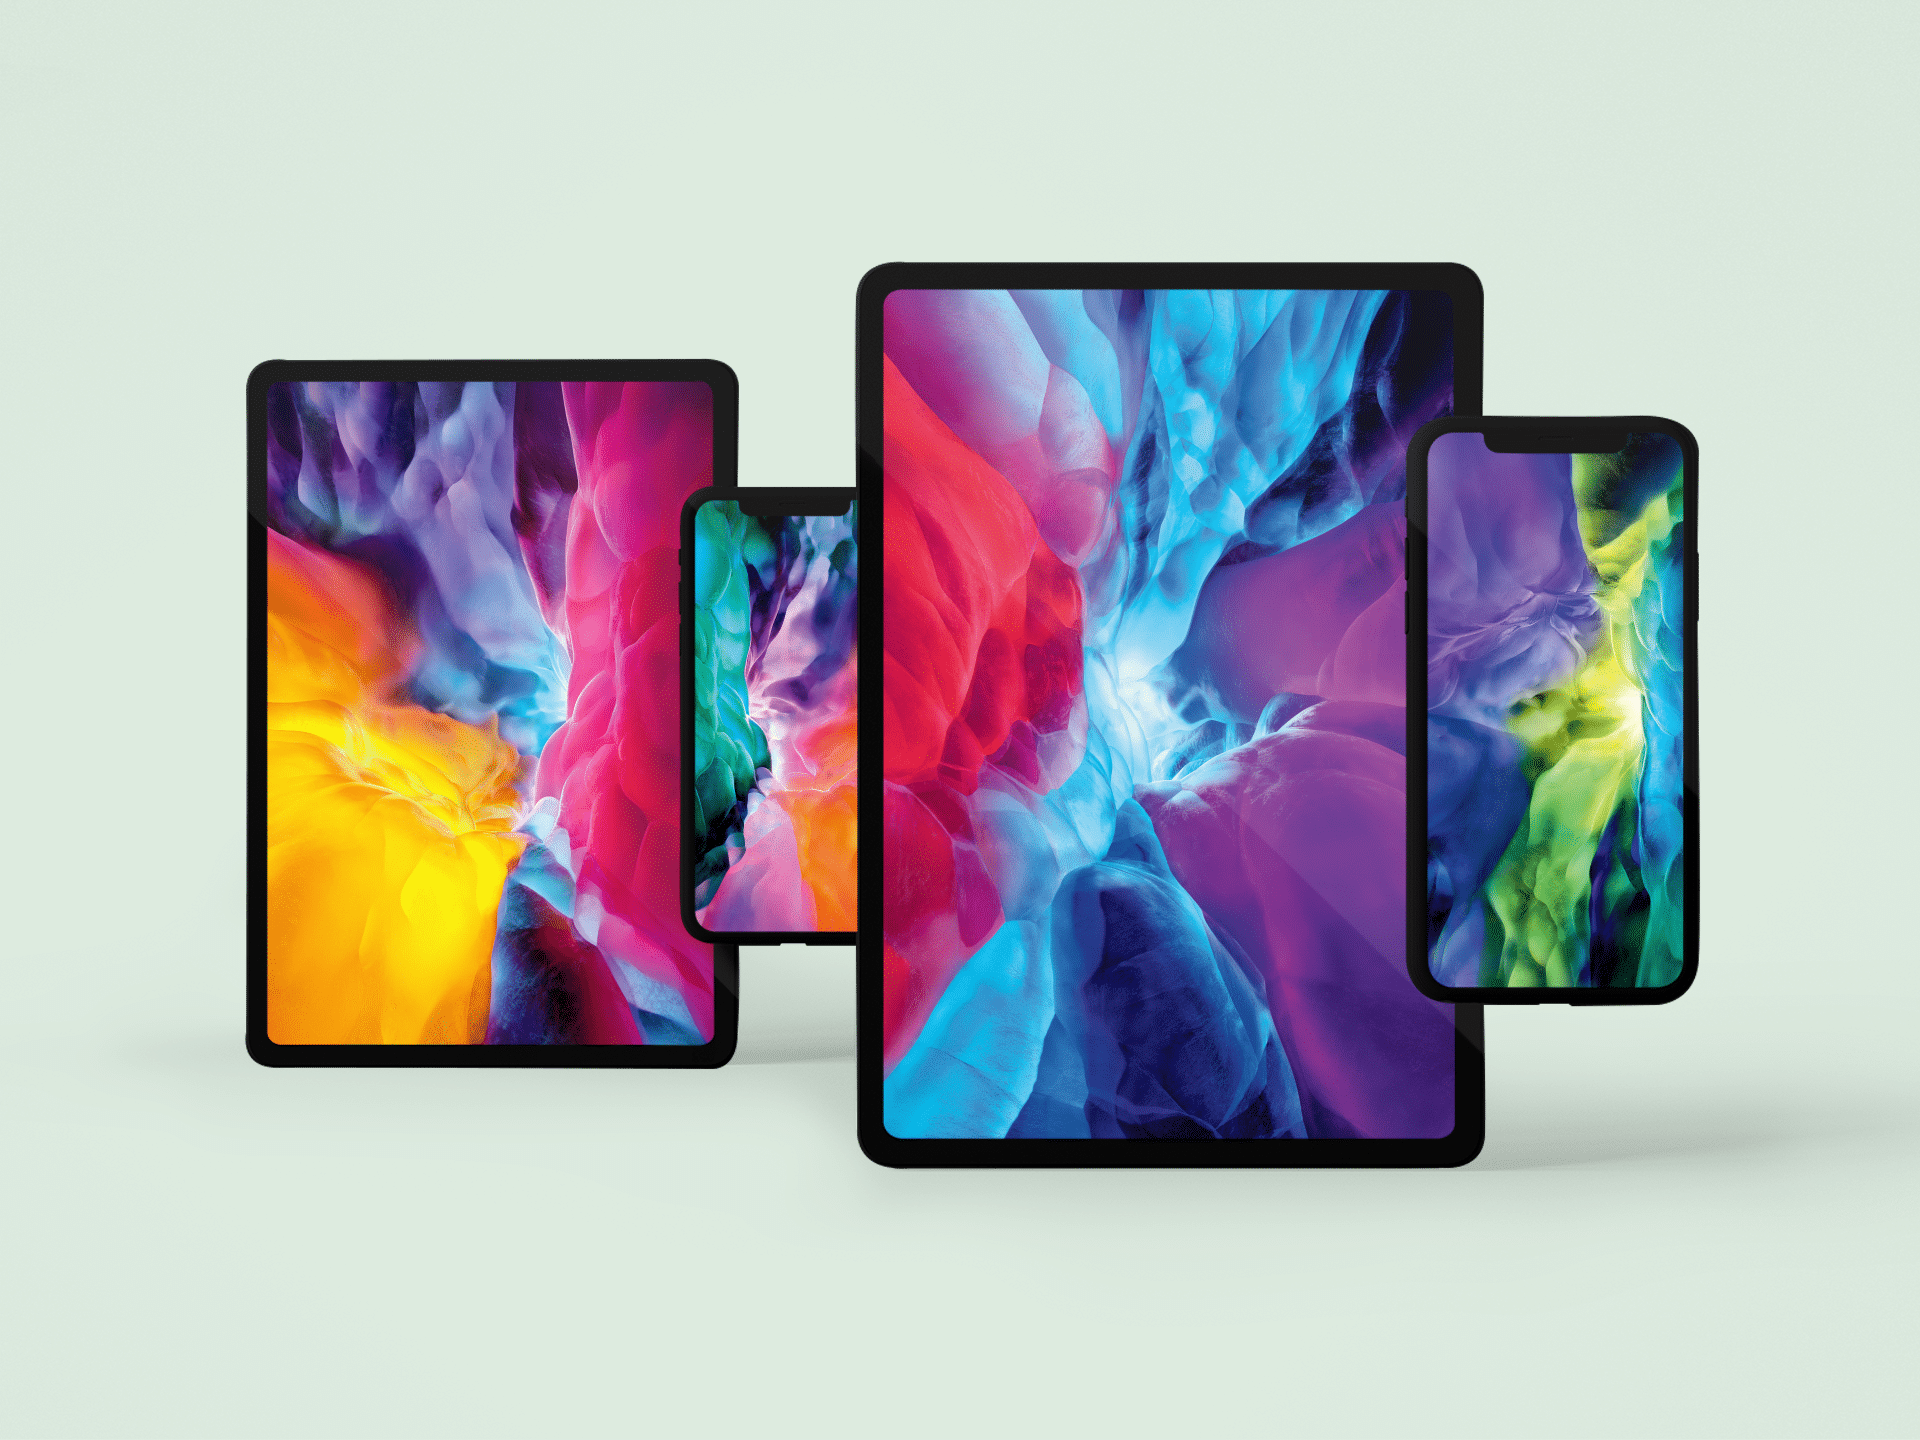 Wallpapers dos novos iPads Pro